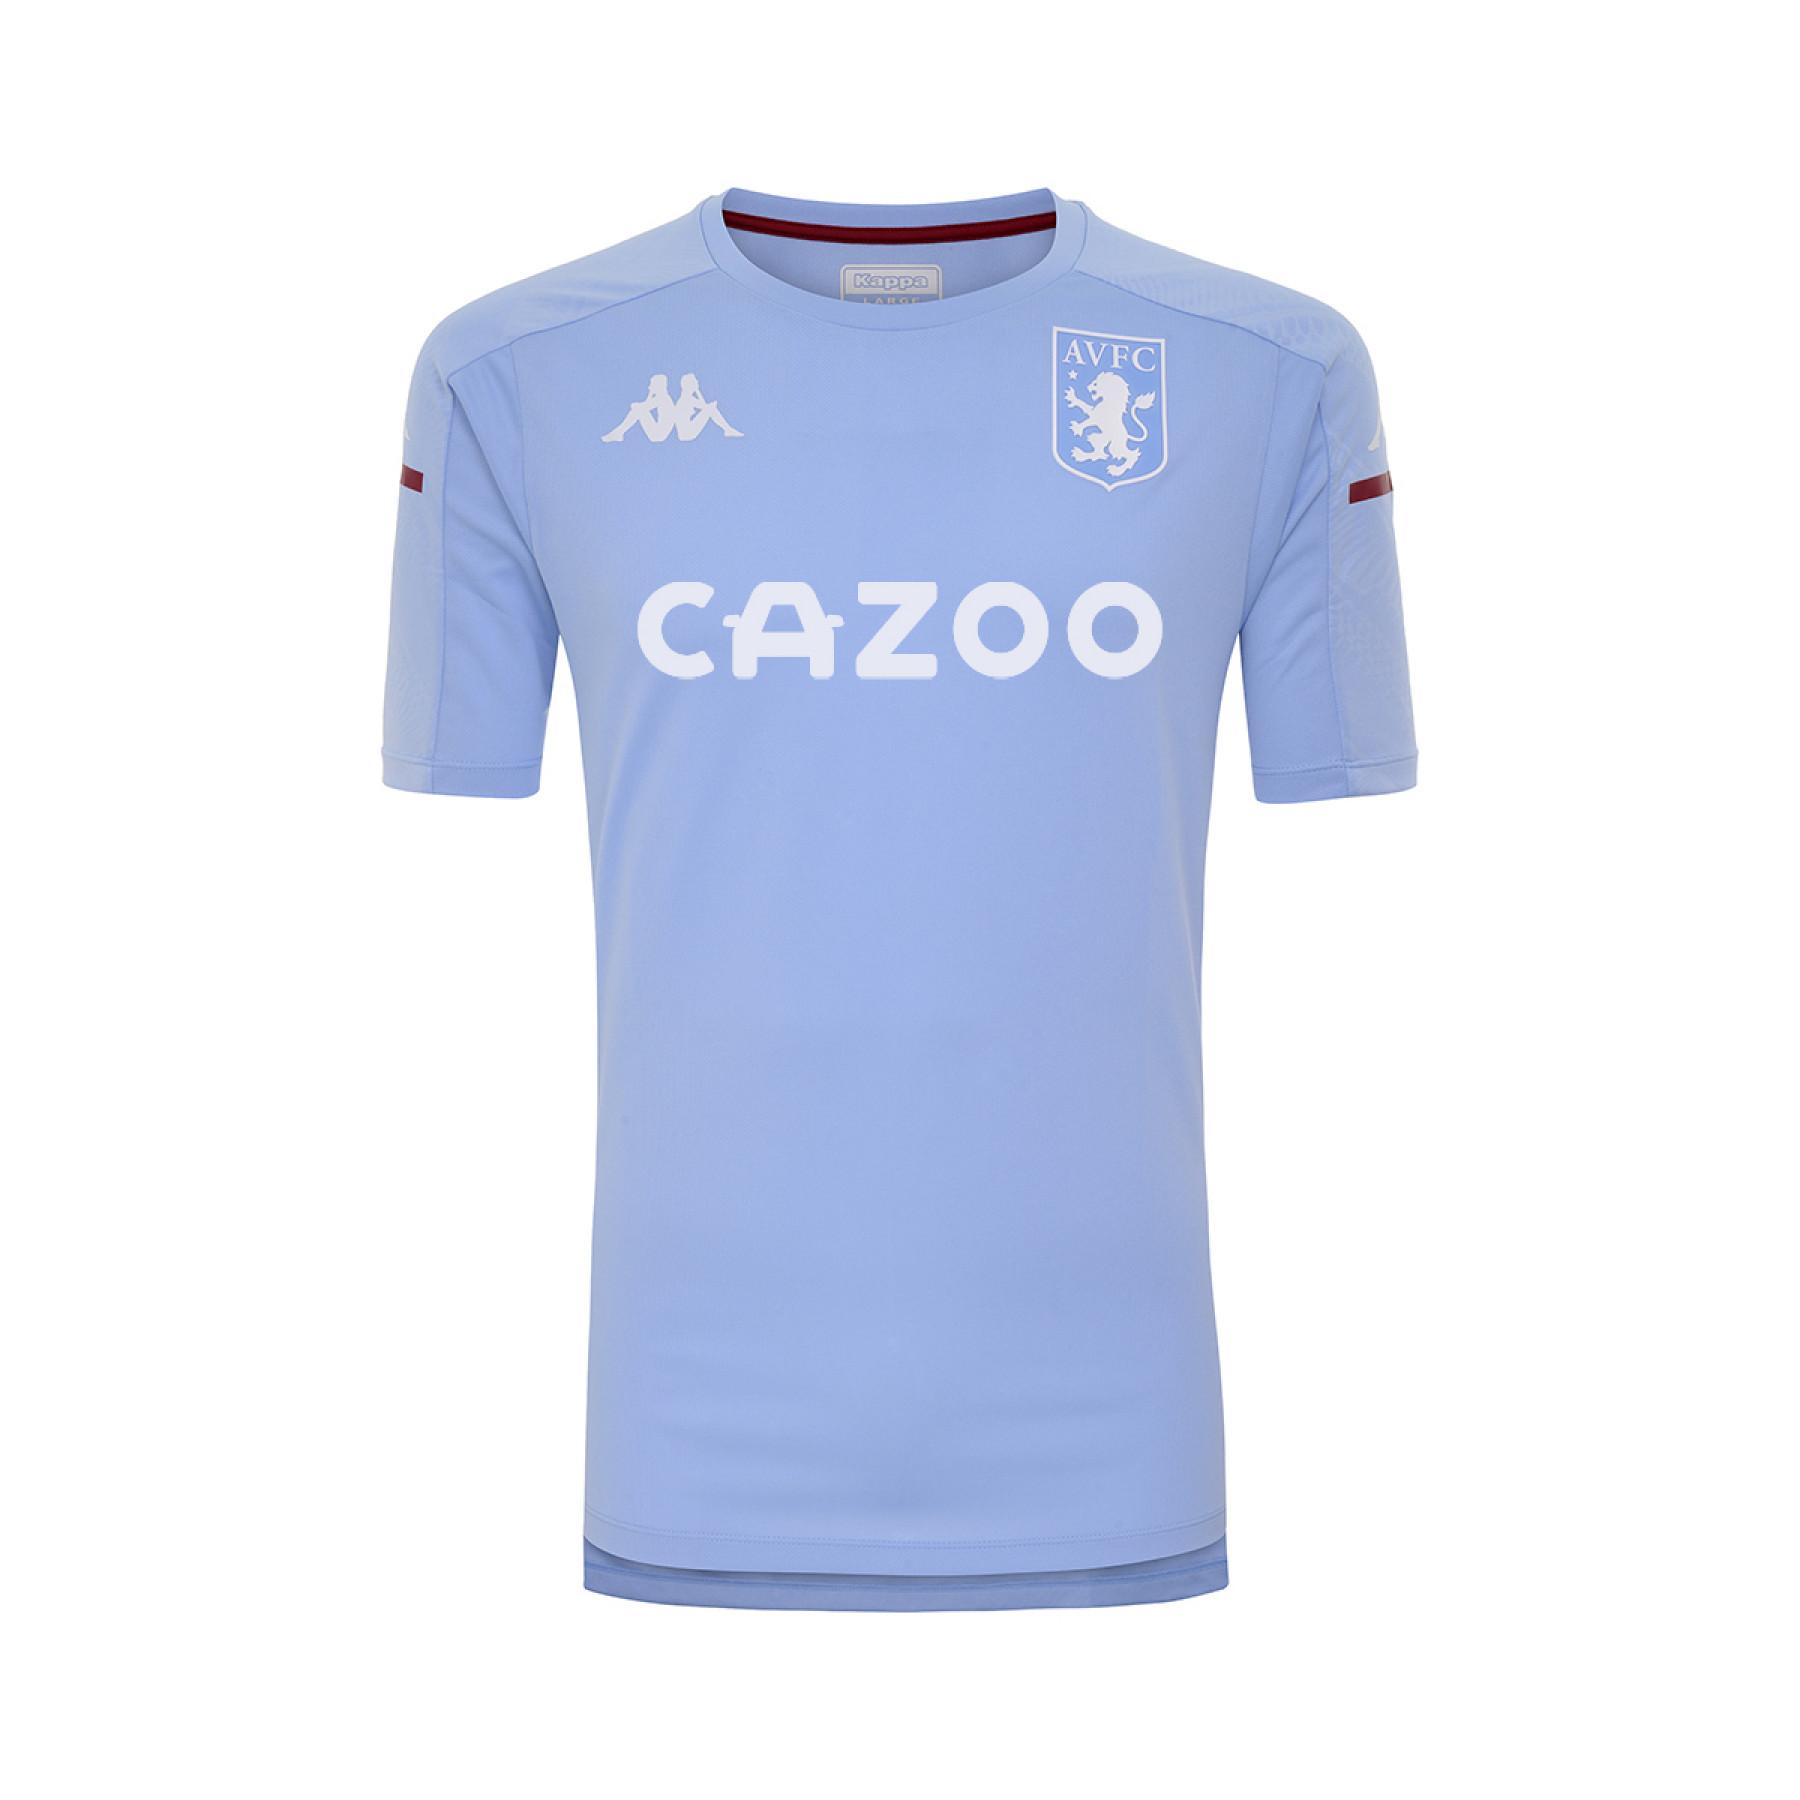 Child's T-shirt Aston Villa FC 2020/21 aboes pro 4